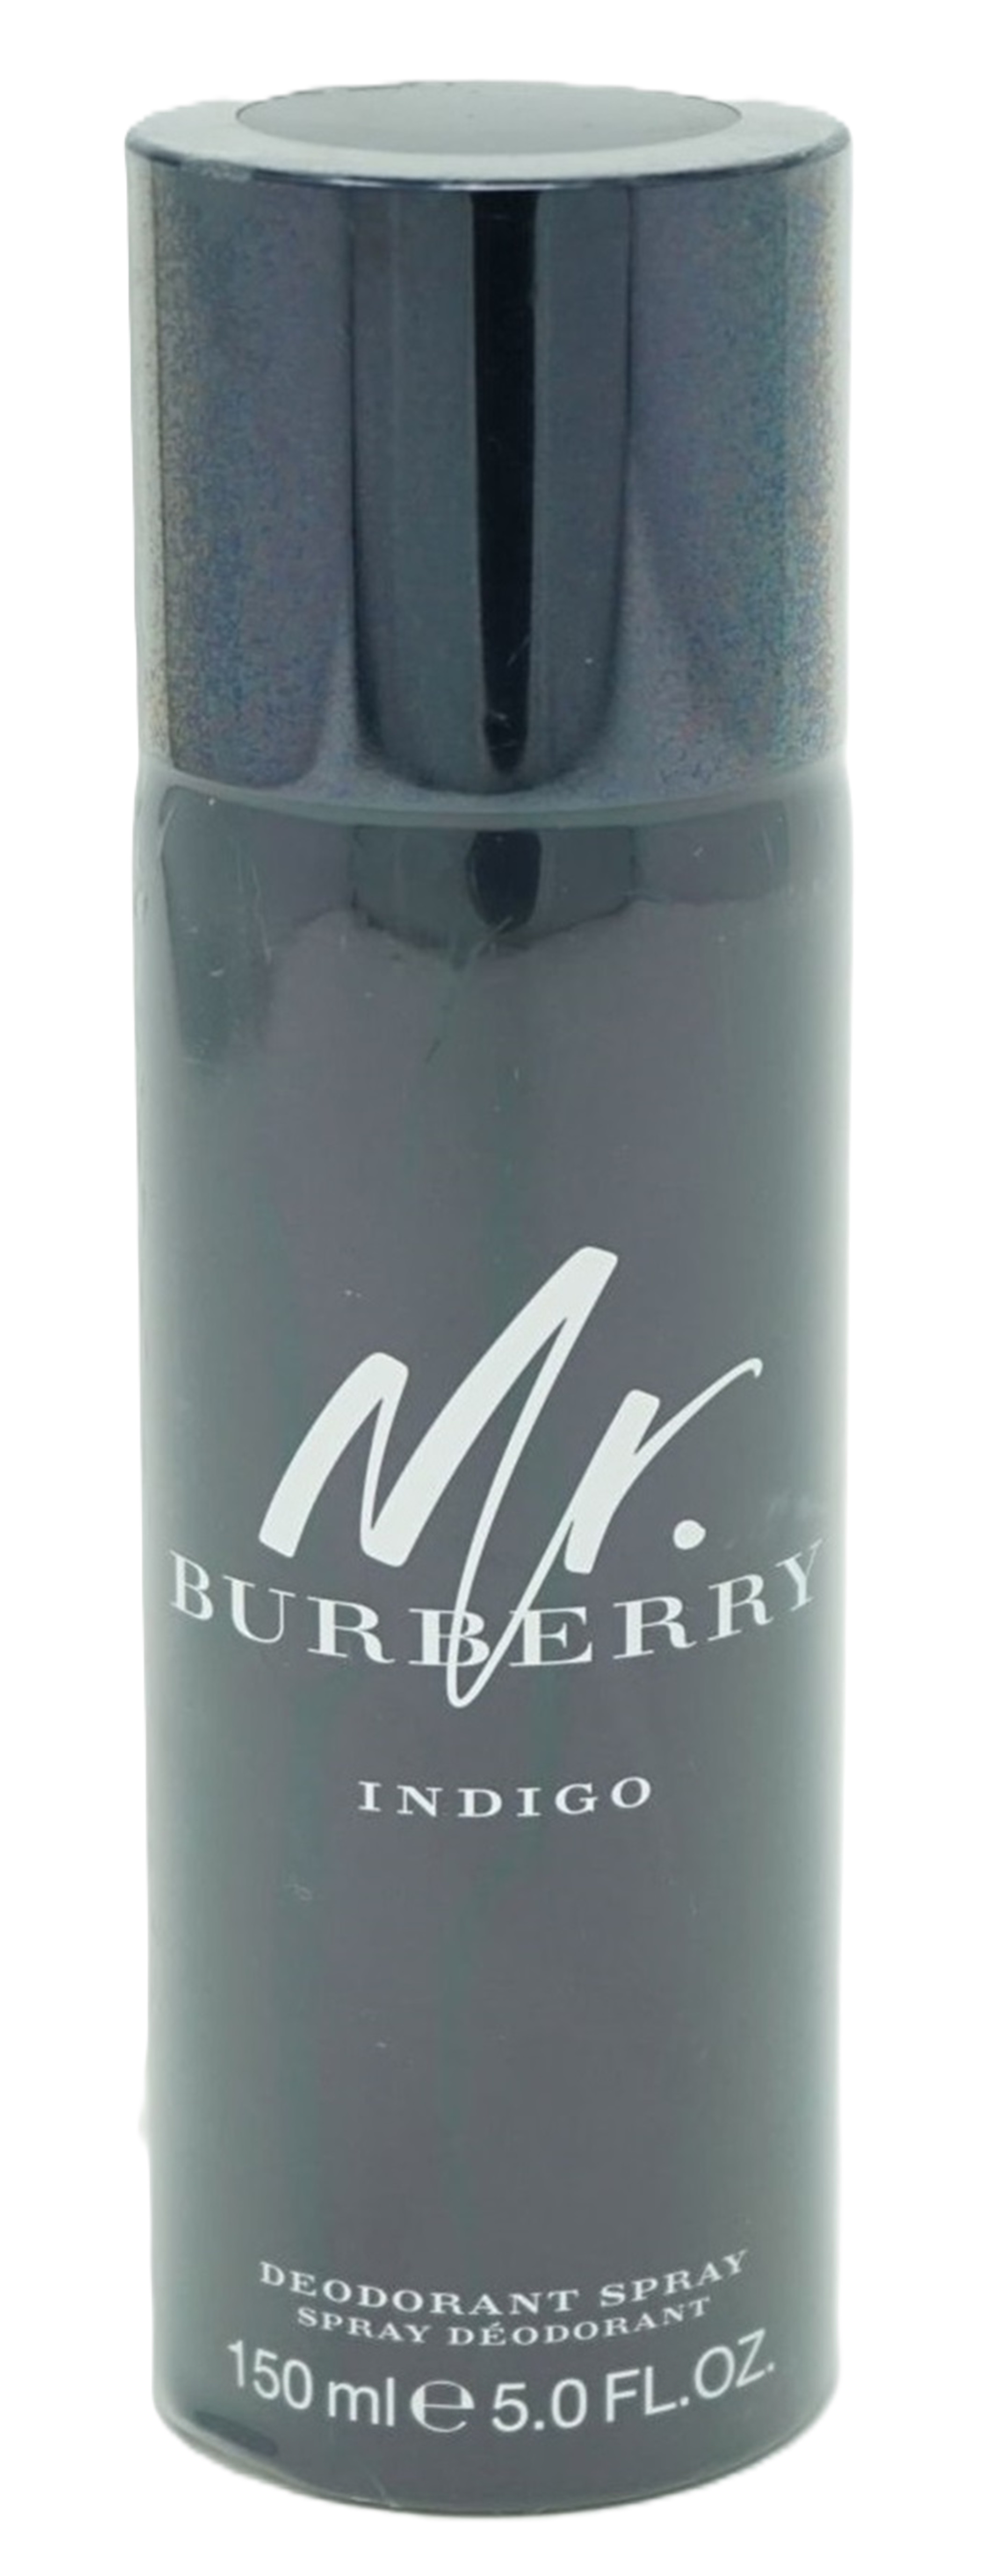 Burberry Mr. Burberry Indigo Deodorant Spray 150ml